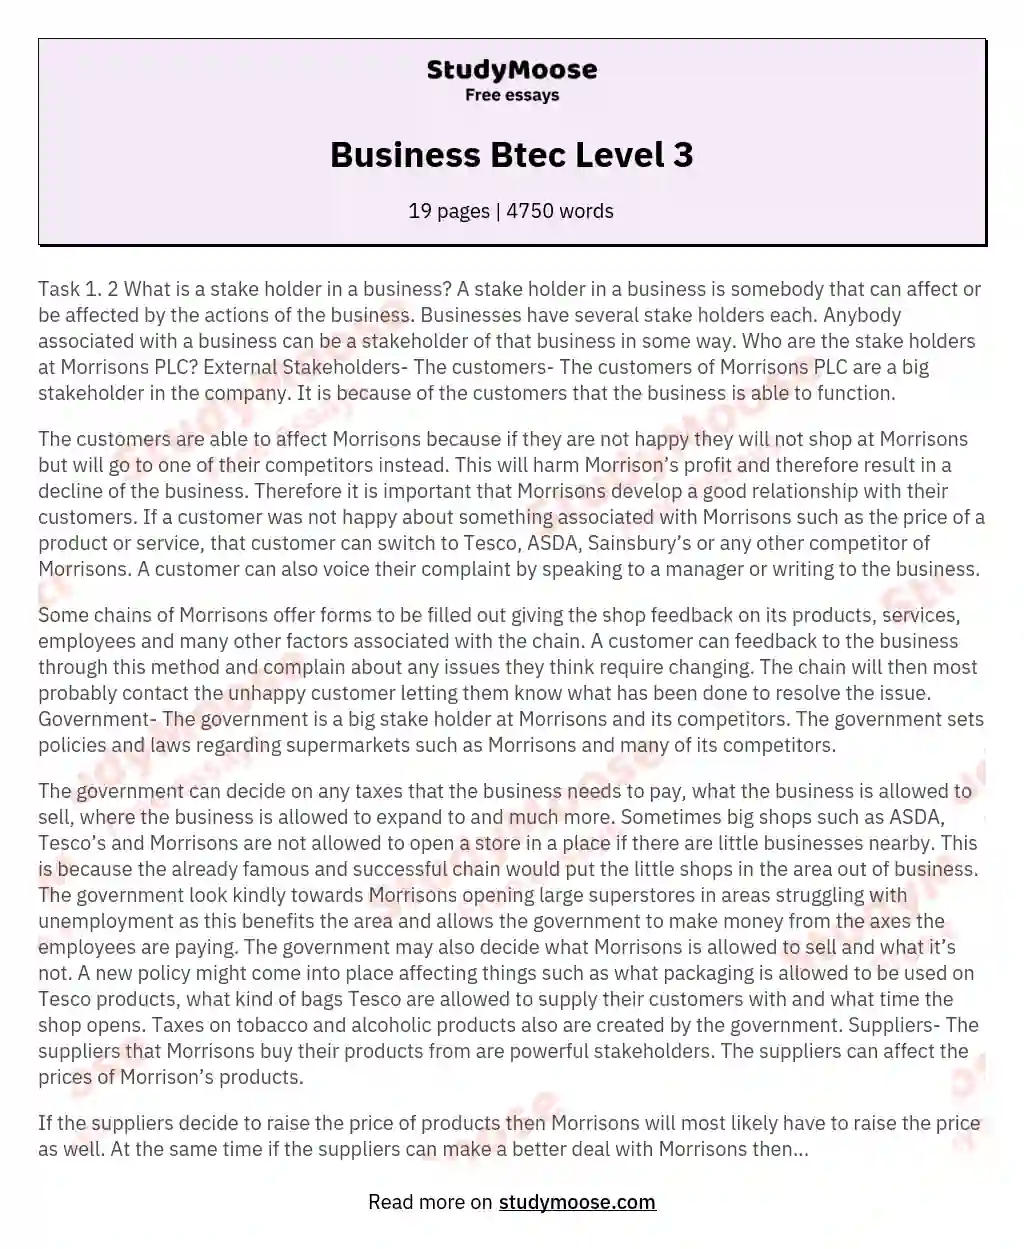 Business Btec Level 3 essay